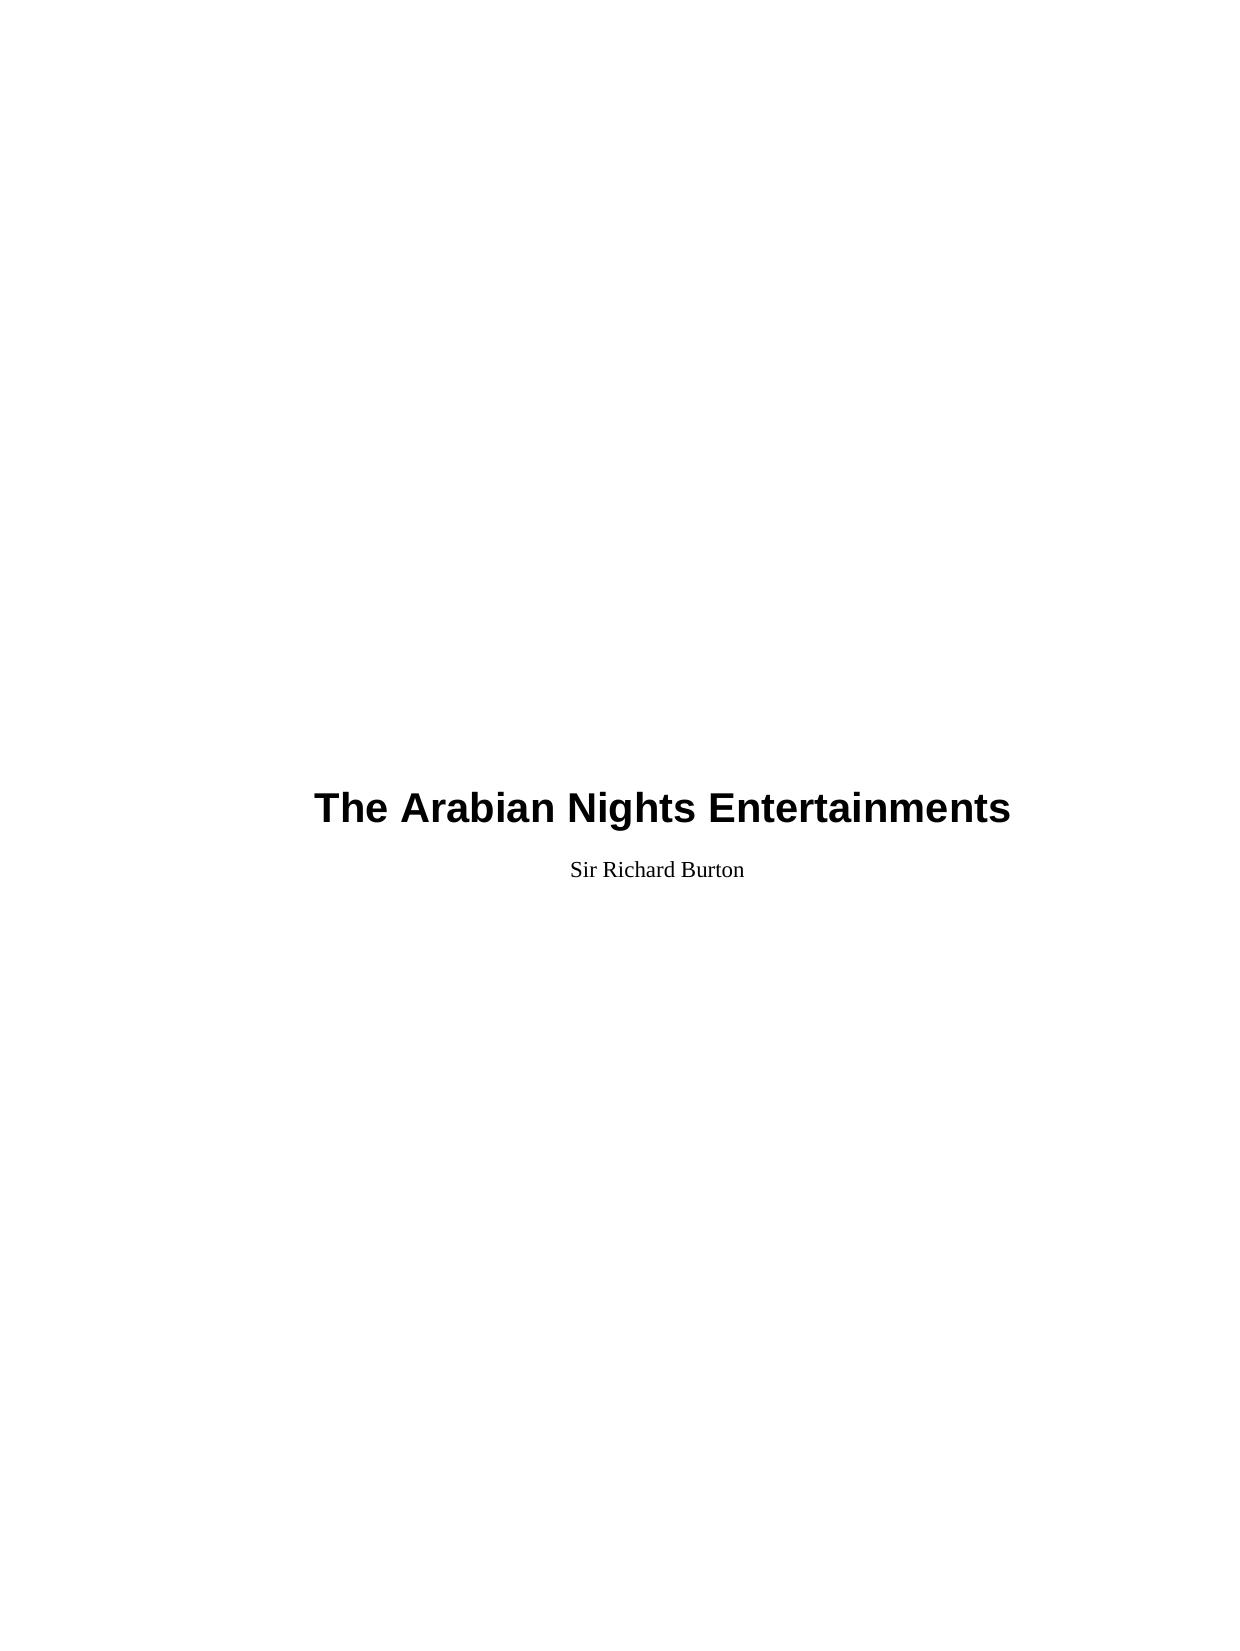 The Arabian Nights Entertainments by Sir Richard Burton